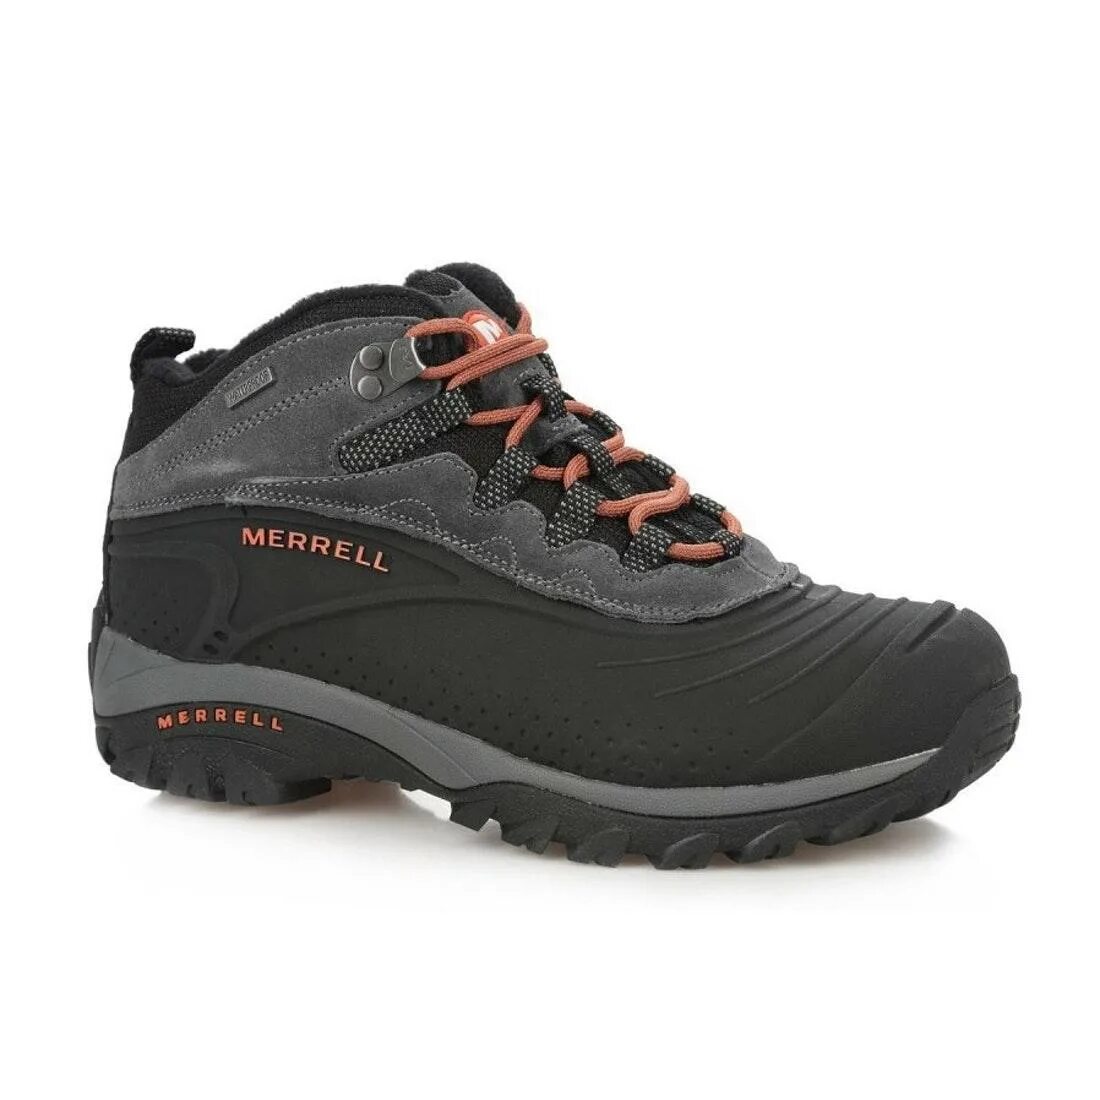 Мерелл обувь купить. Merrell Storm Trekker. Ботинки Merrell j83351. Merrell Storm Trekker 6 men’s. Ботинки трекинговые Merrell мужские.